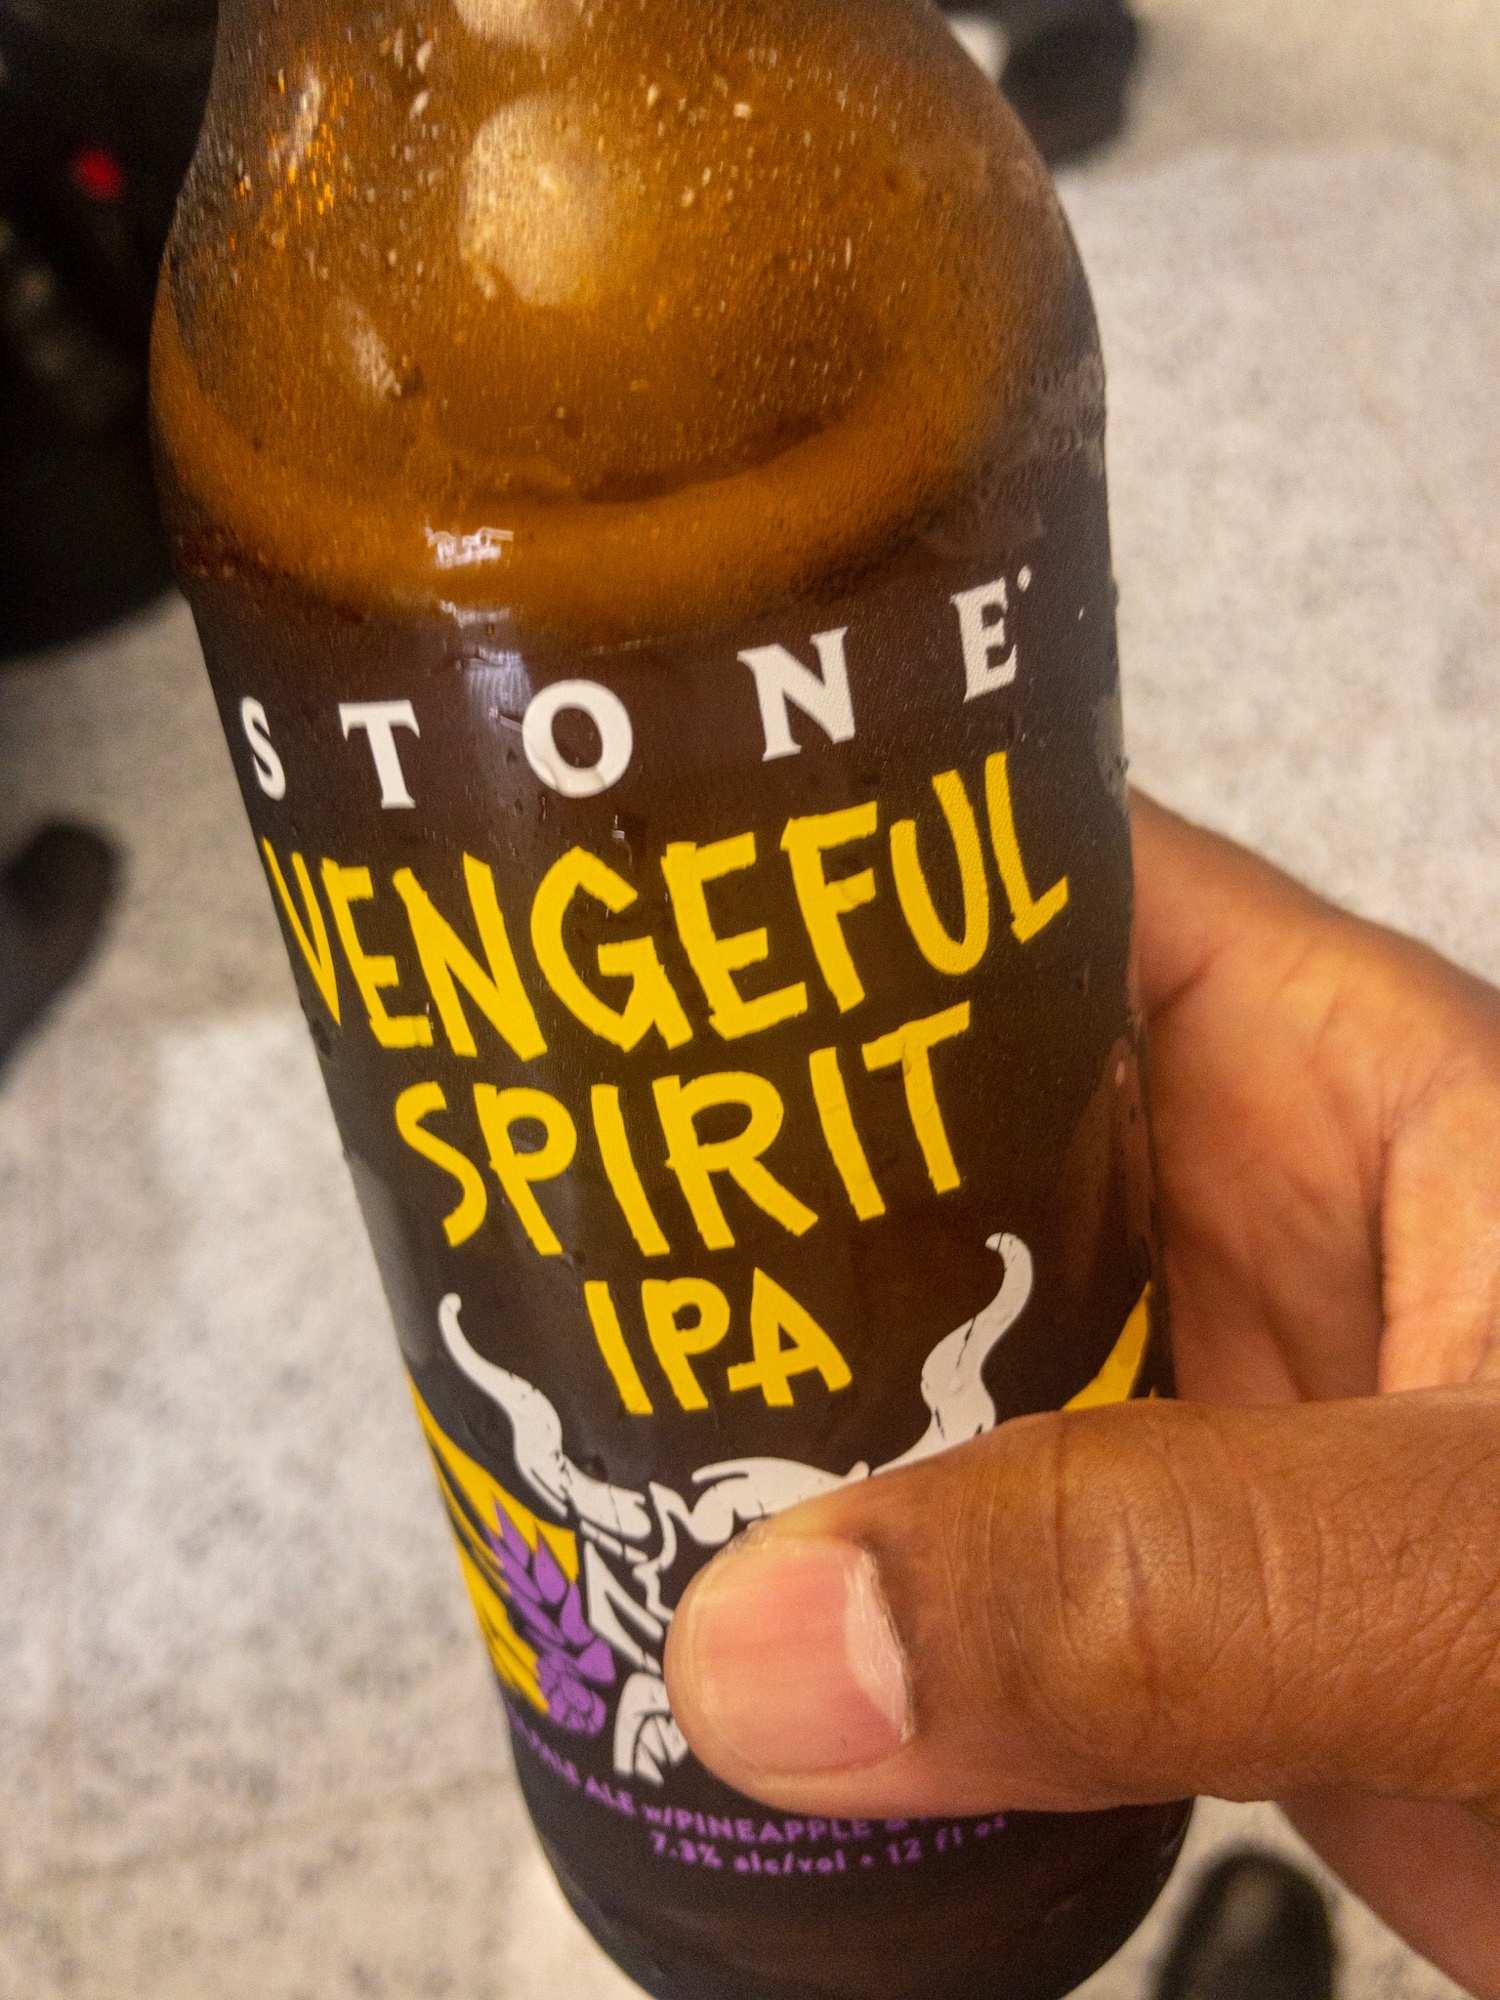 Stone Brewing's Stone Vengeful Spirit IPA